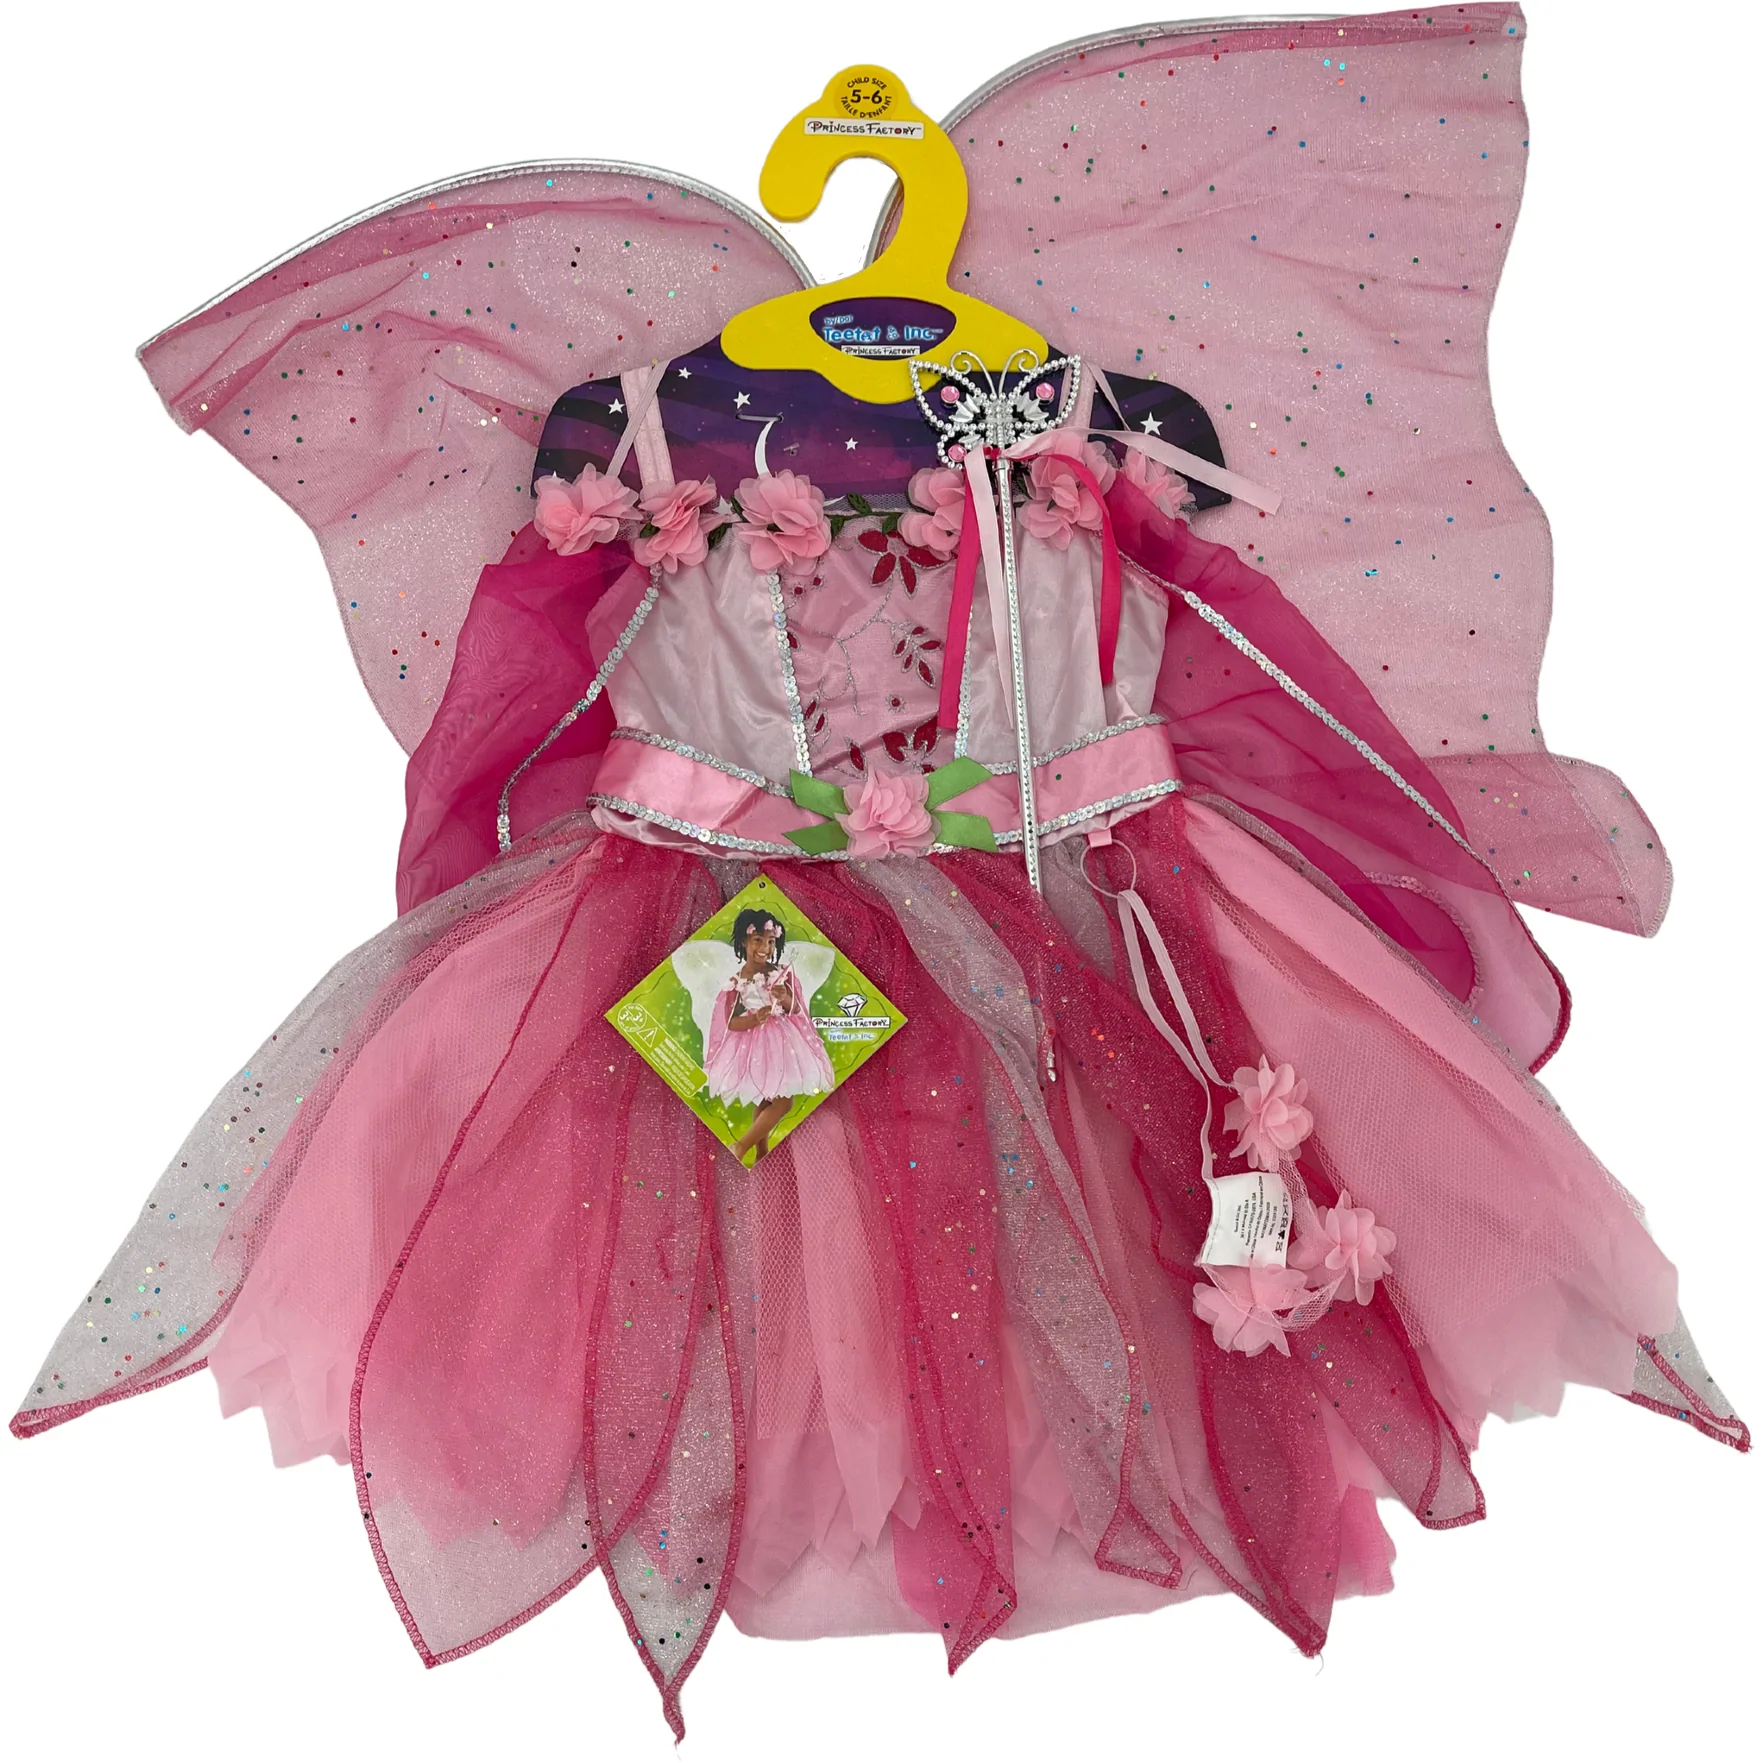 Teetot & Co Children's Halloween Costume / Pink Petal Fairy / Pretend Play / Various Sizes